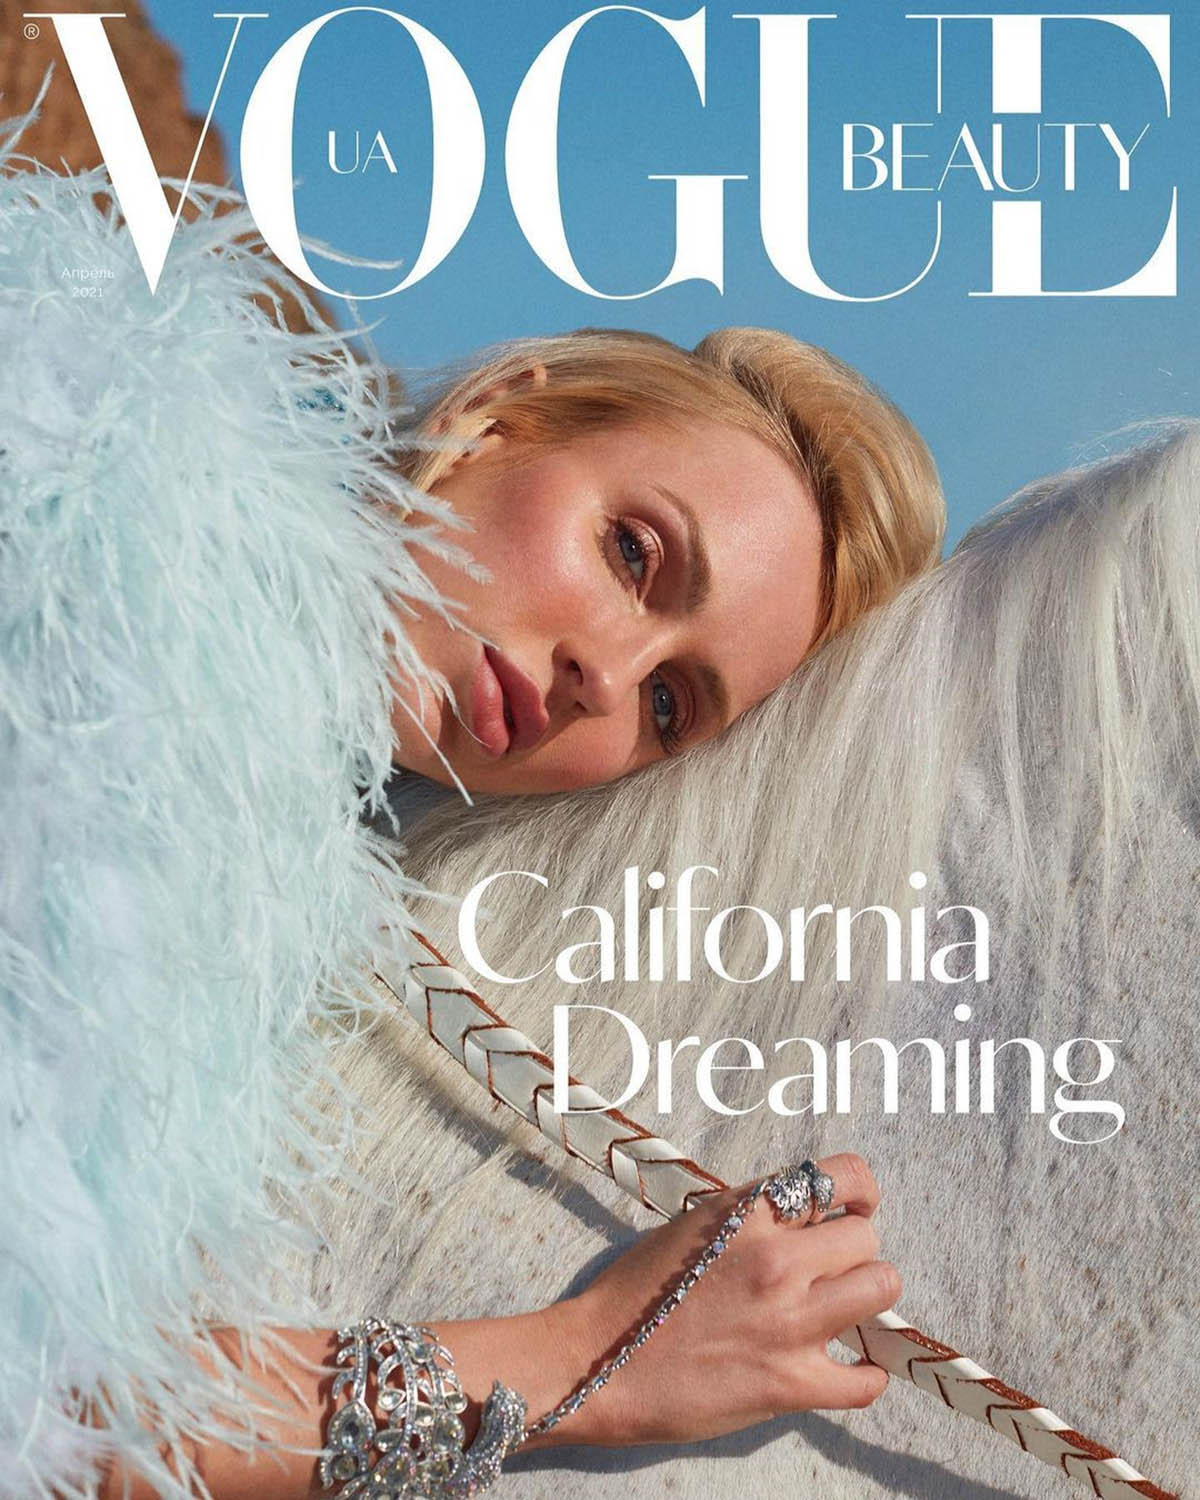 Christine Quinn covers Vogue Beauty Ukraine April 2021 by Edward Aninaru